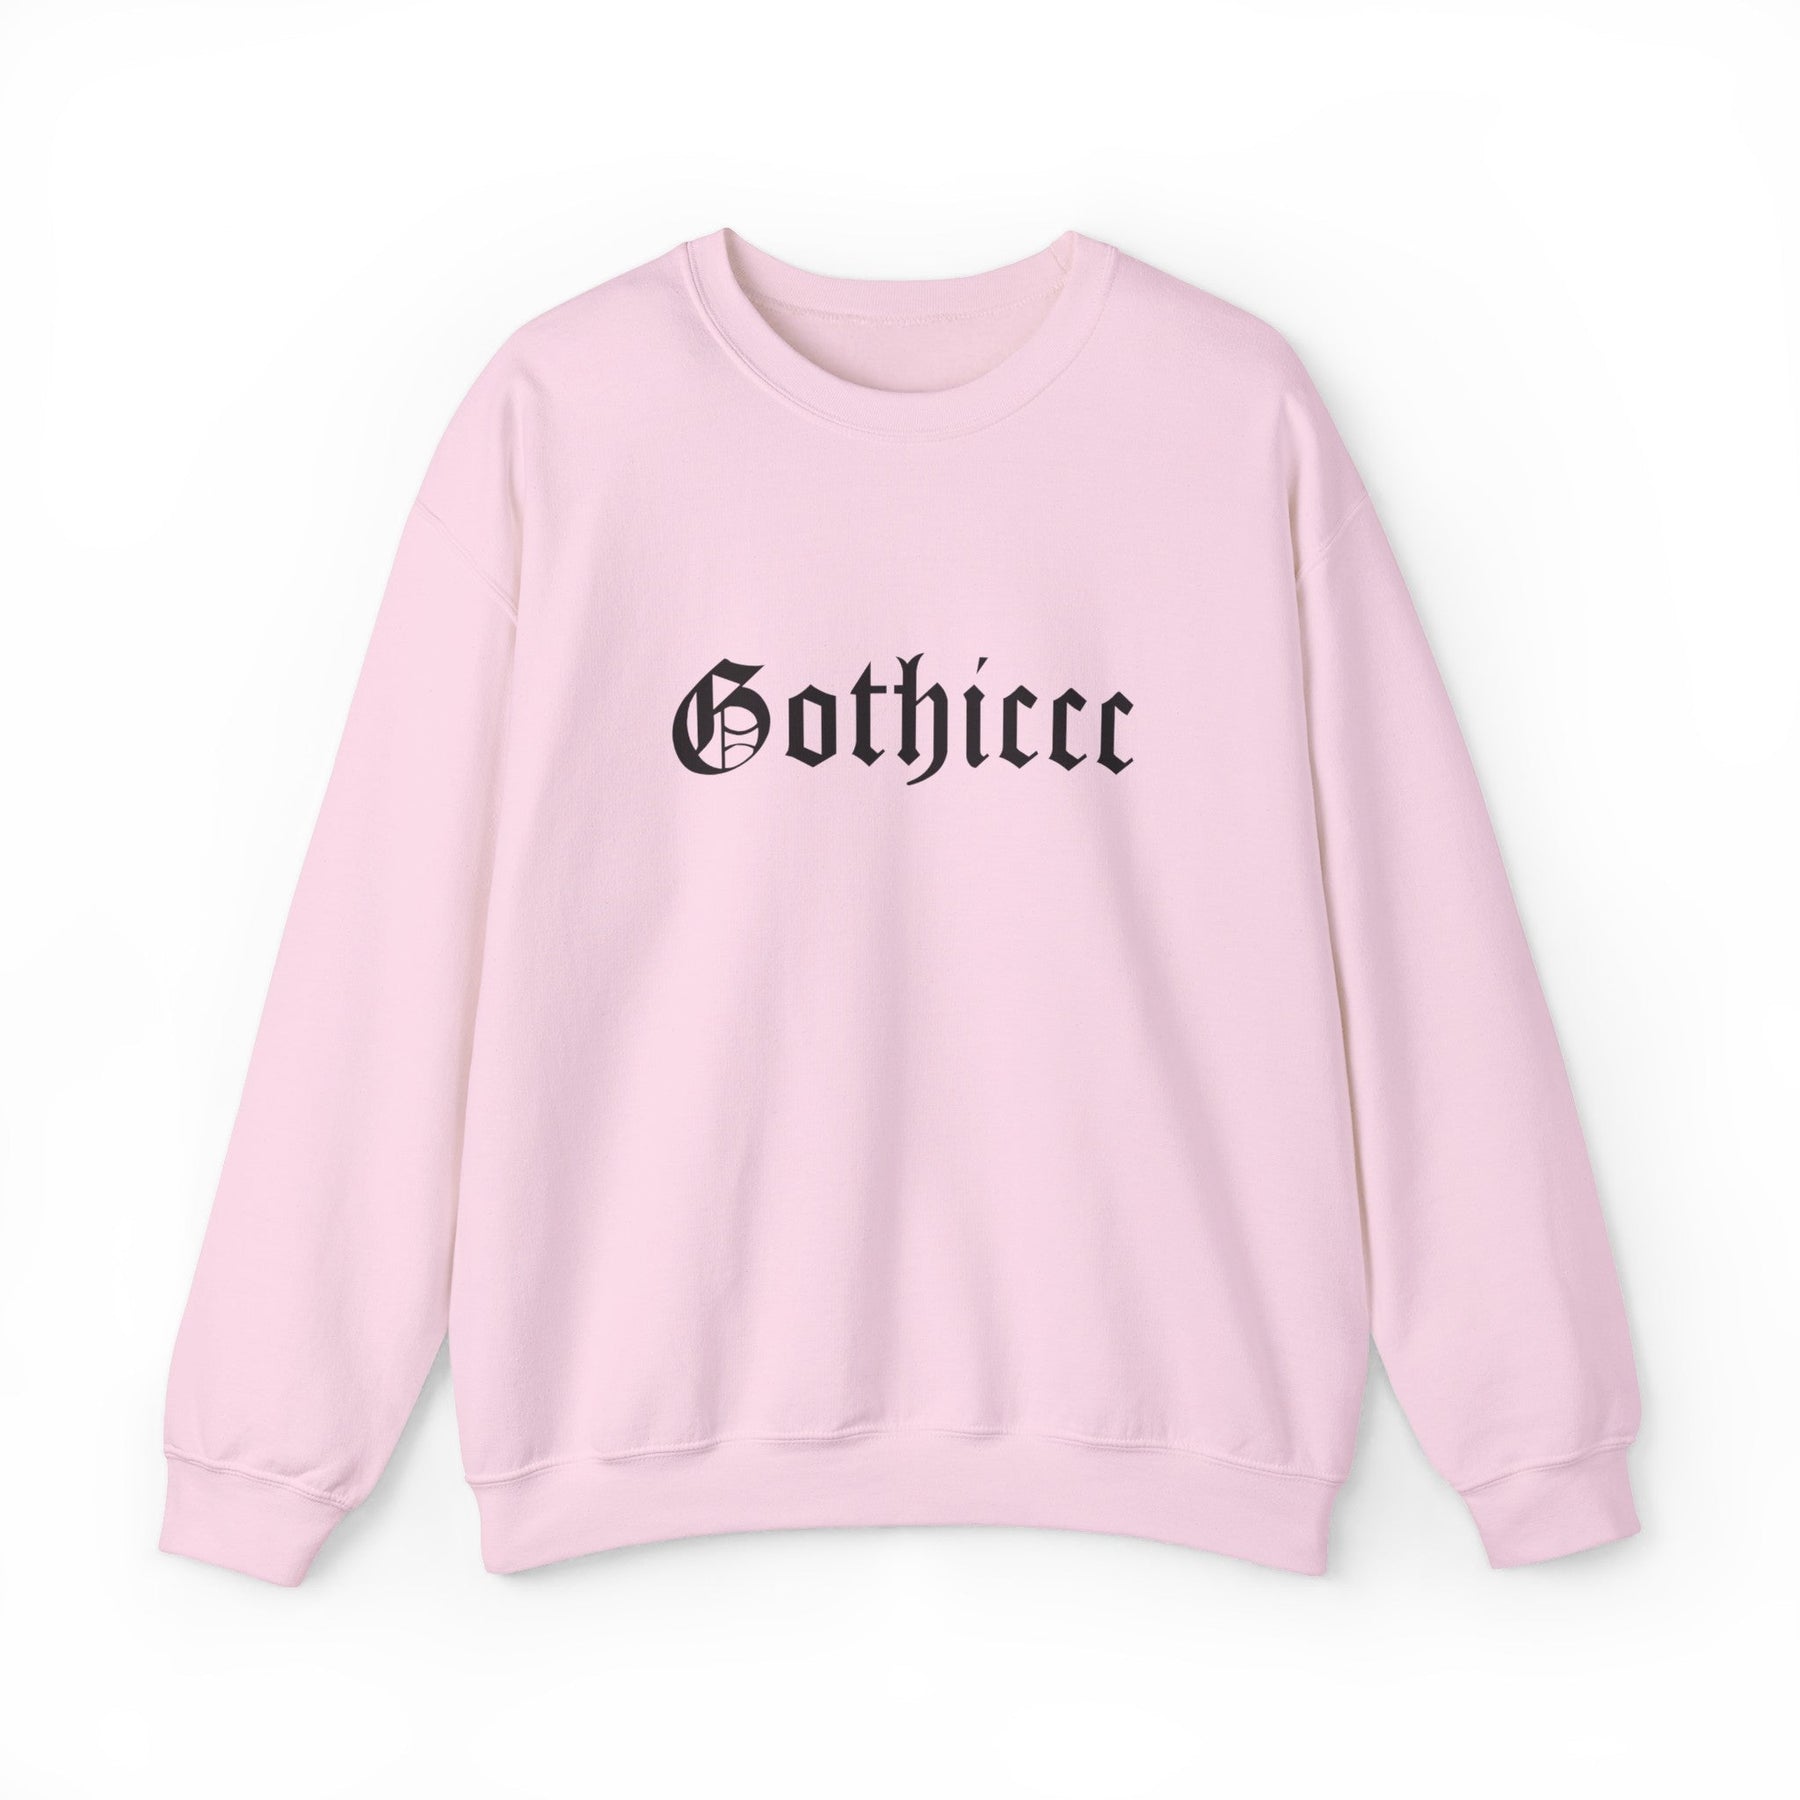 Gothiccc Long Sleeve Crew Neck Sweatshirt - Goth Cloth Co.Sweatshirt36422554195725747590